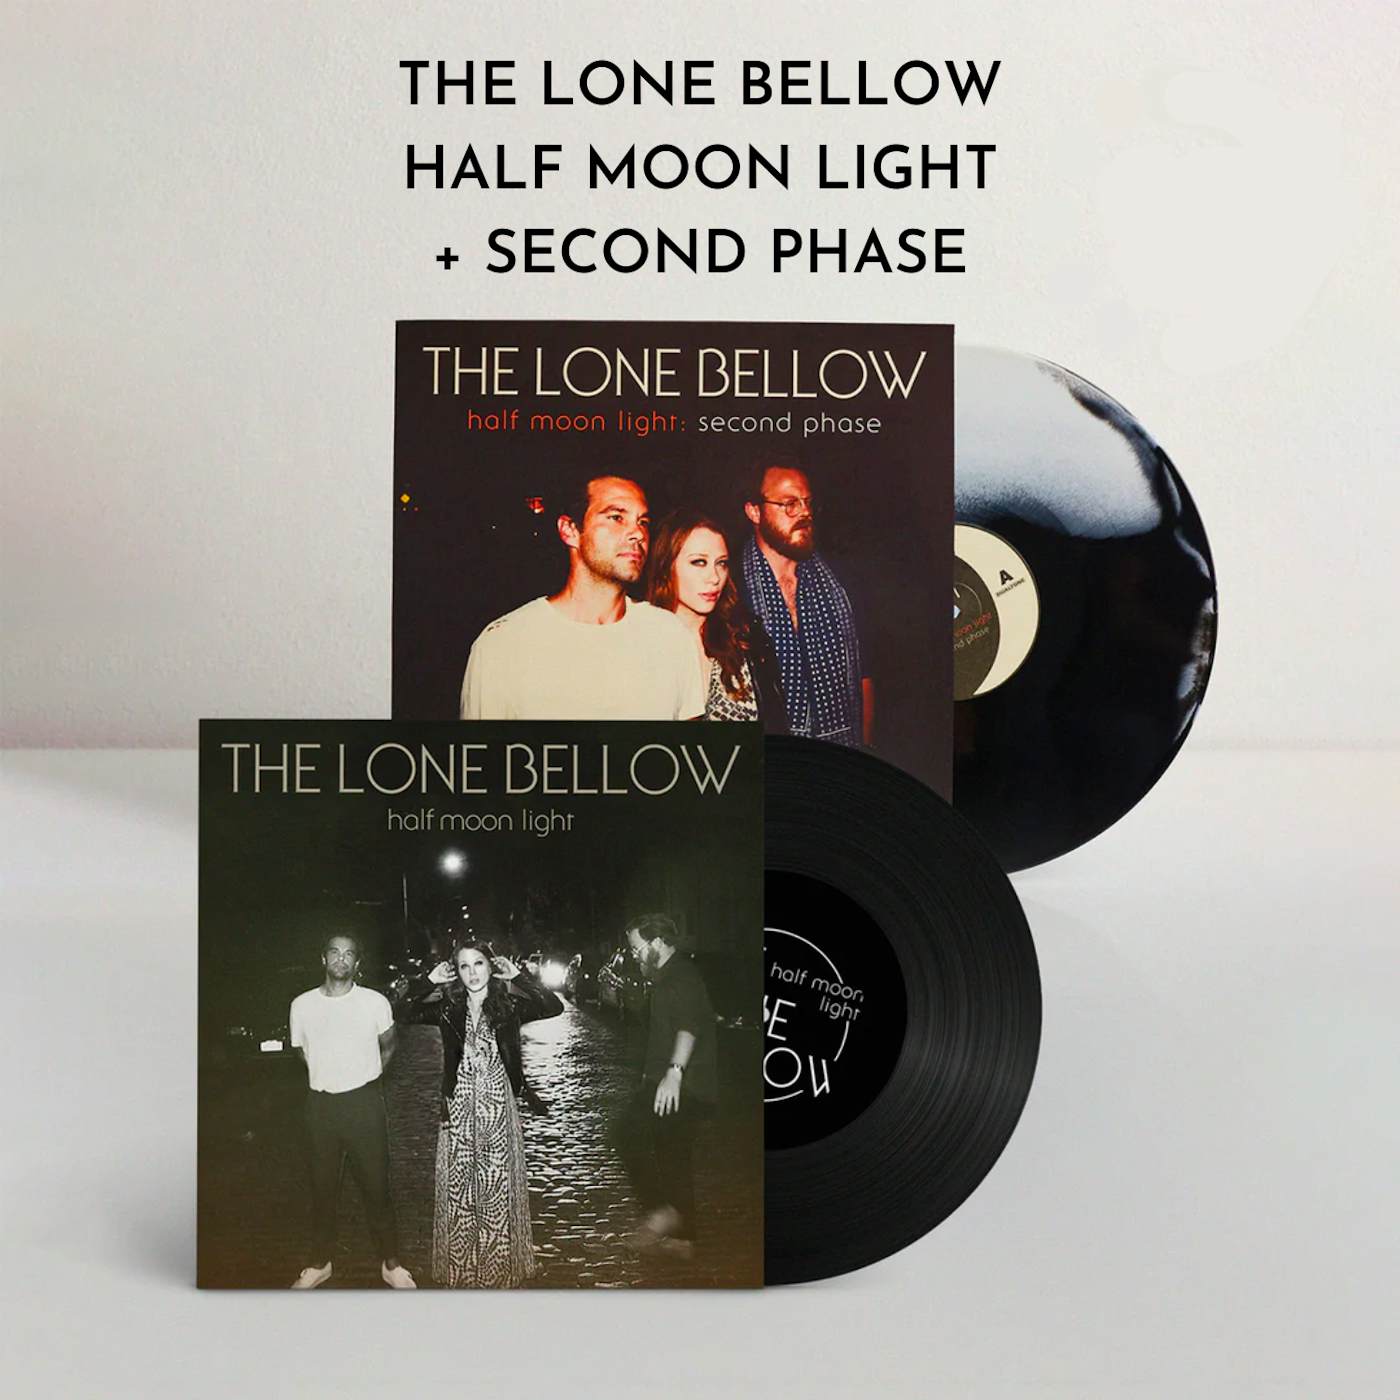 The Lone Bellow Half Moon Light (LP) + Half Moon Light Second Phase (LP) (Vinyl)